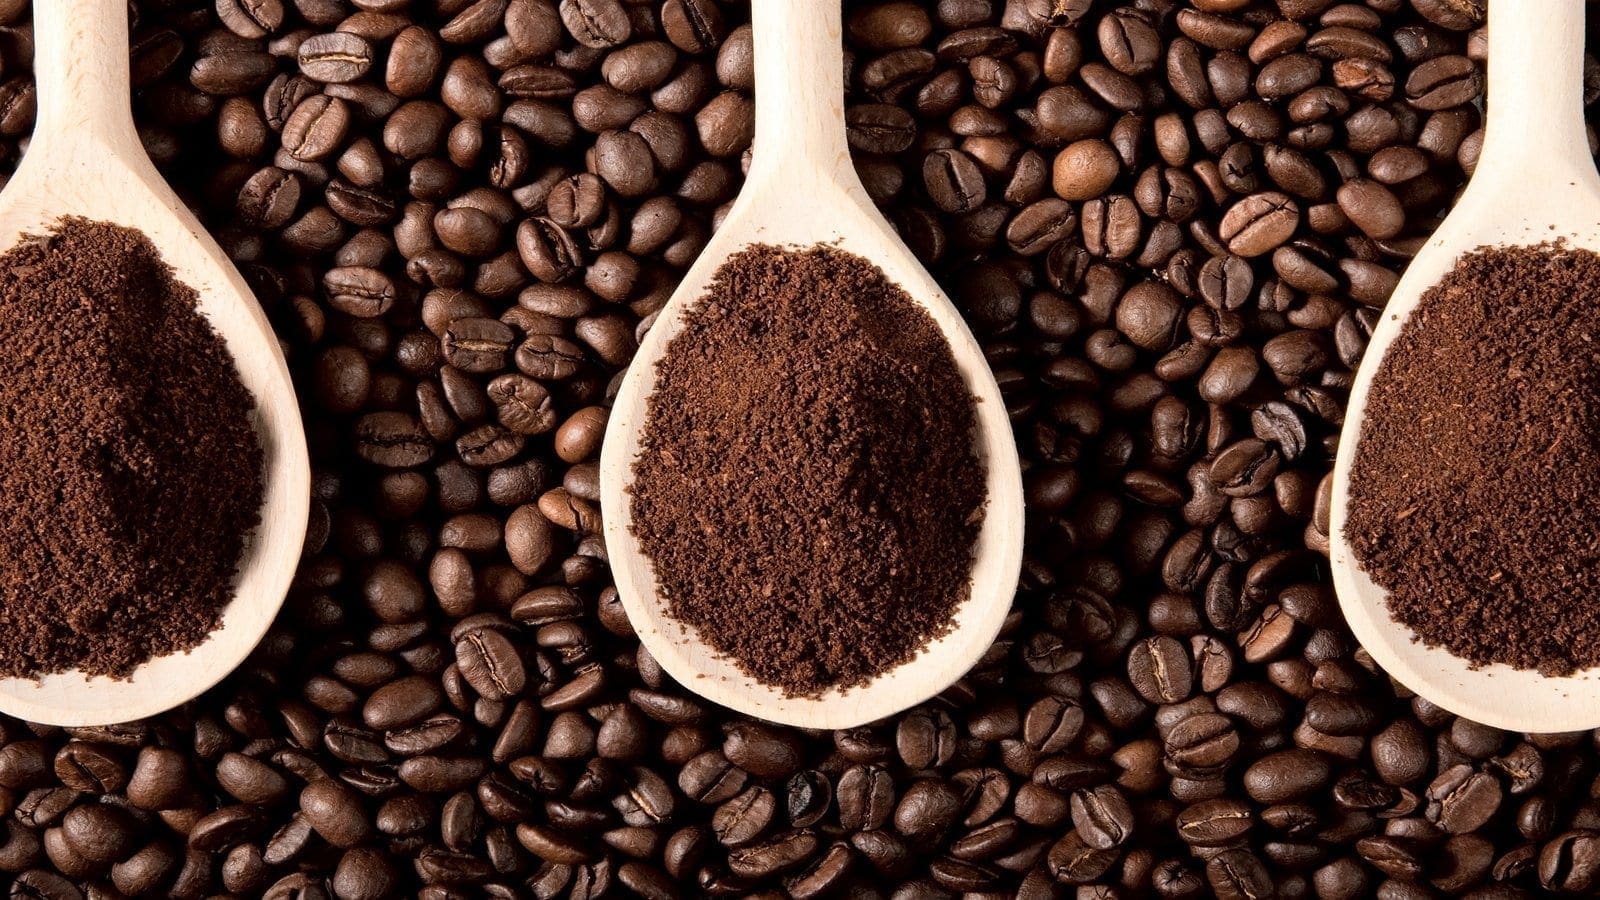 Italian Vinci Coffee Company seeks to setup coffee processing plant in Uganda